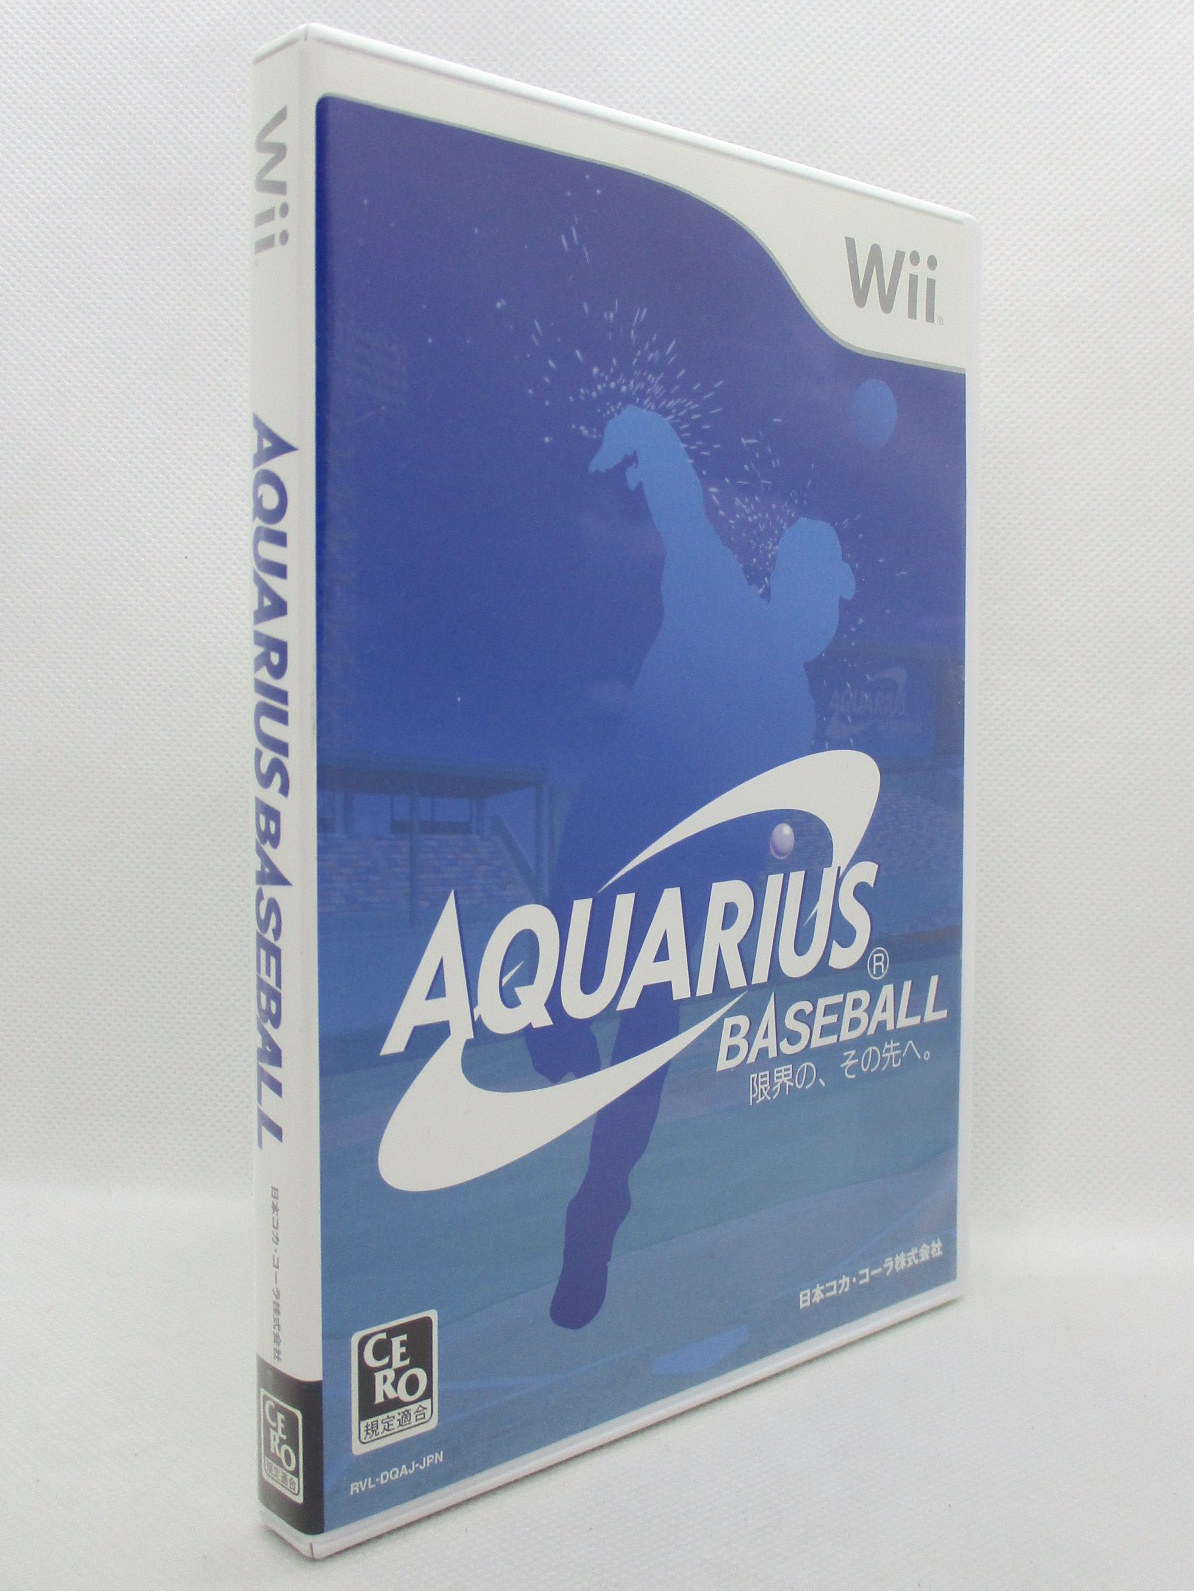 Wii AQUARIUS BASEBALL